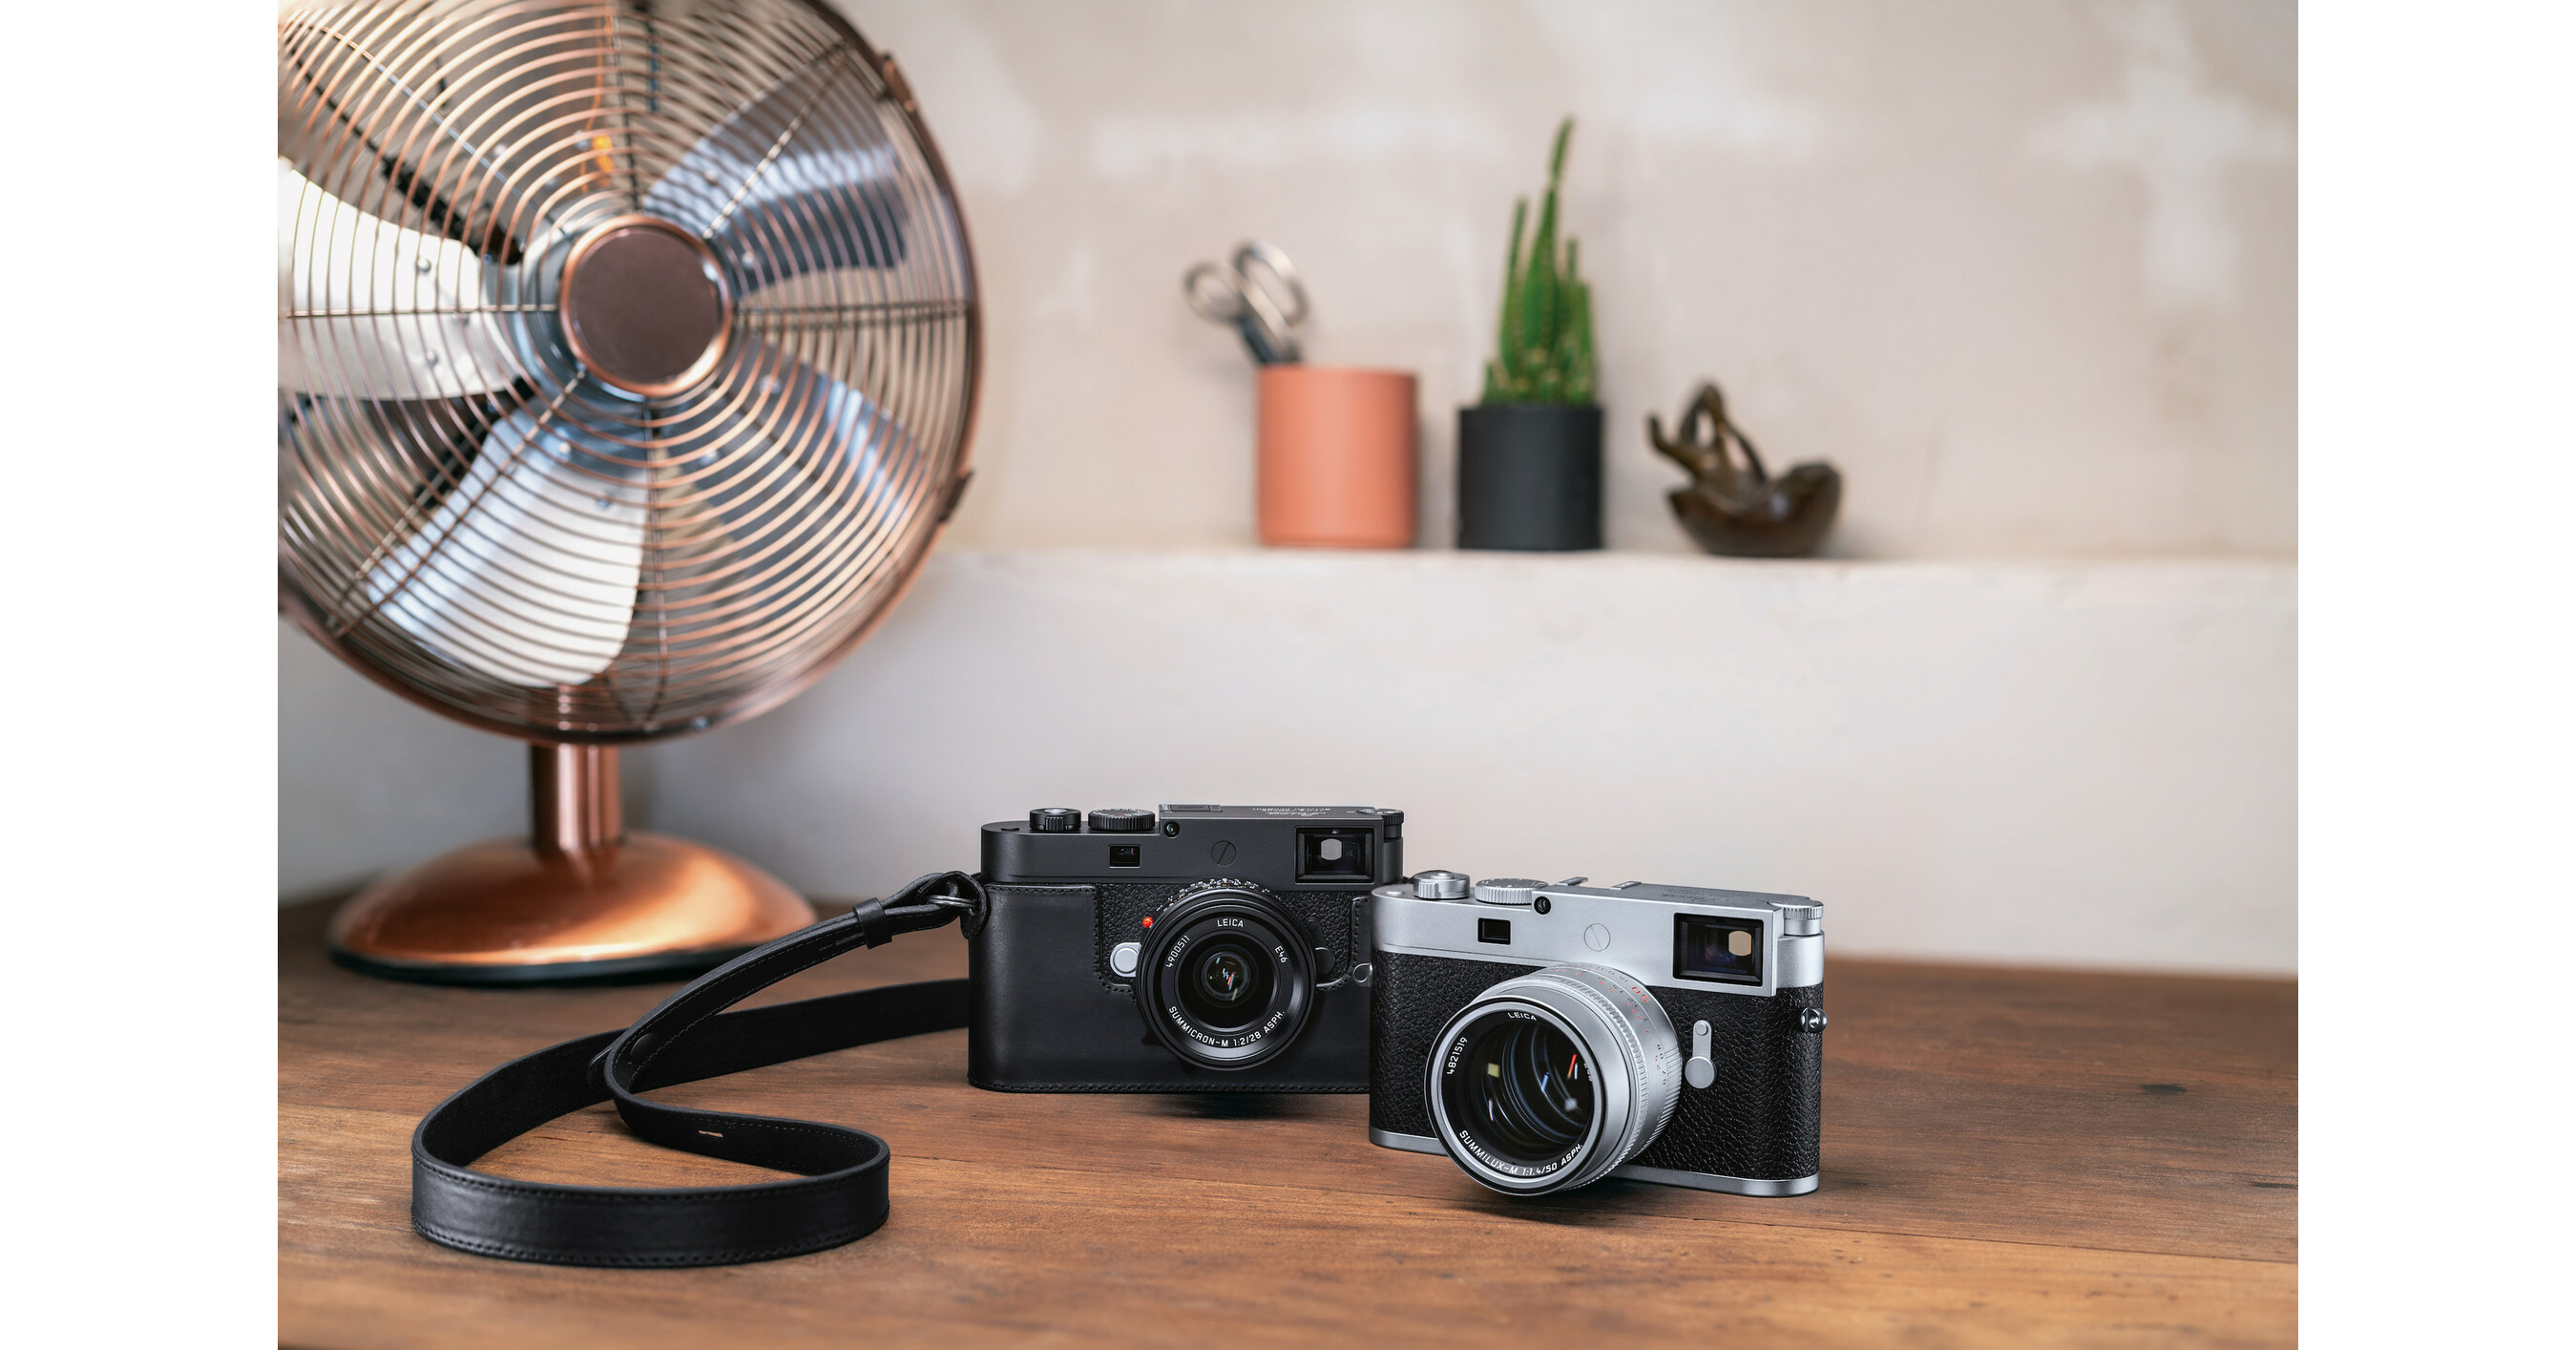 Meet the Leica M11-P rangefinder, the world's first anti-AI camera